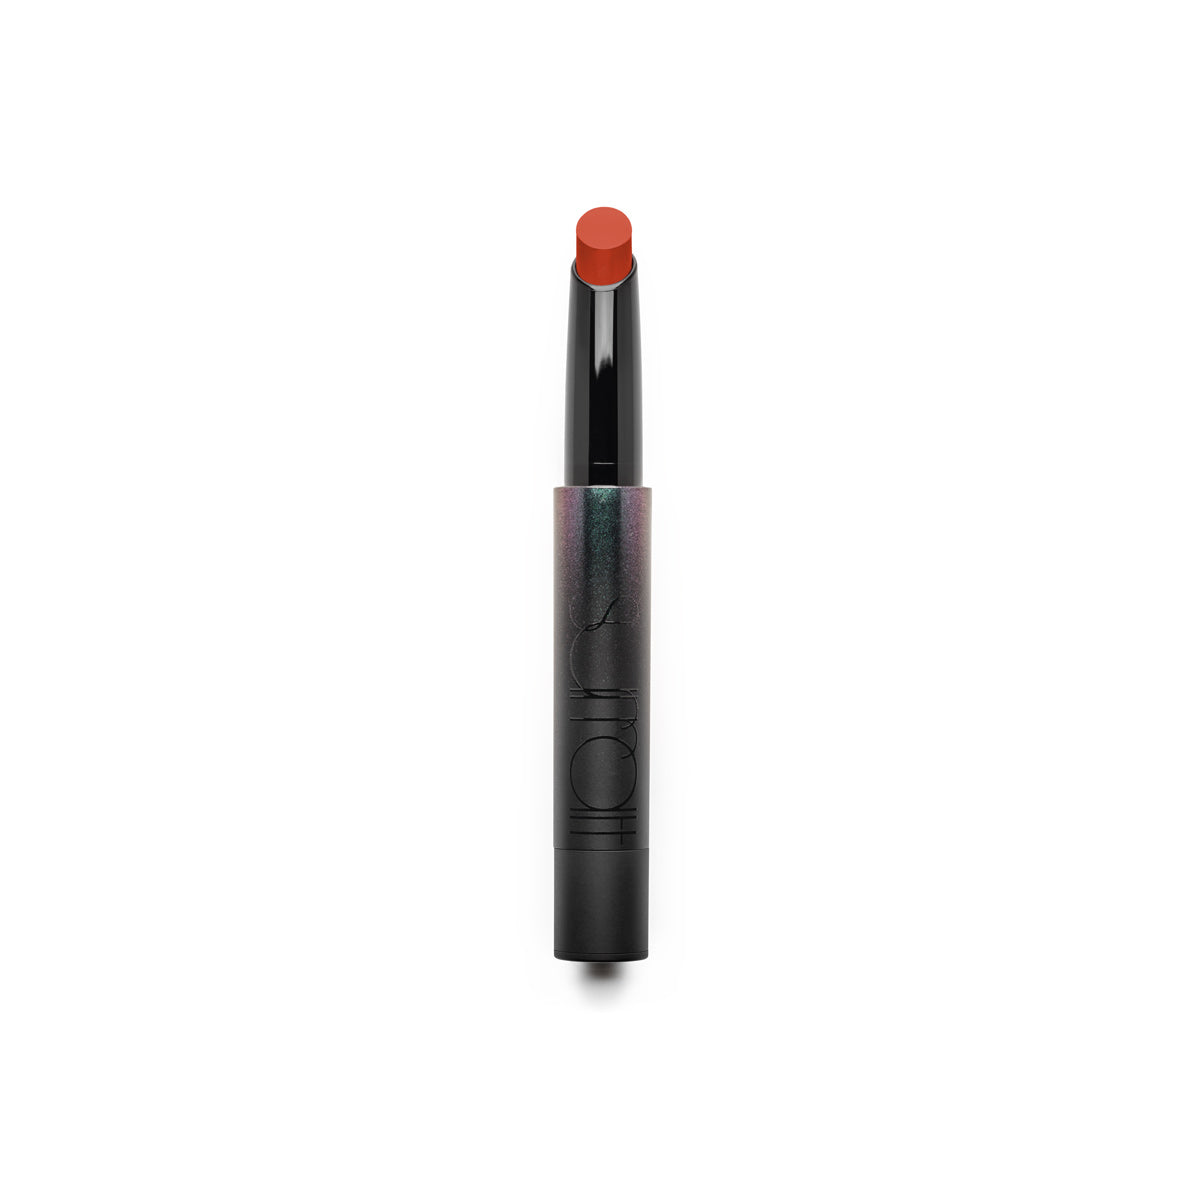 LADYBUG - WARM CORAL - creamy moisturizing lipstick lip balm in warm coral shade